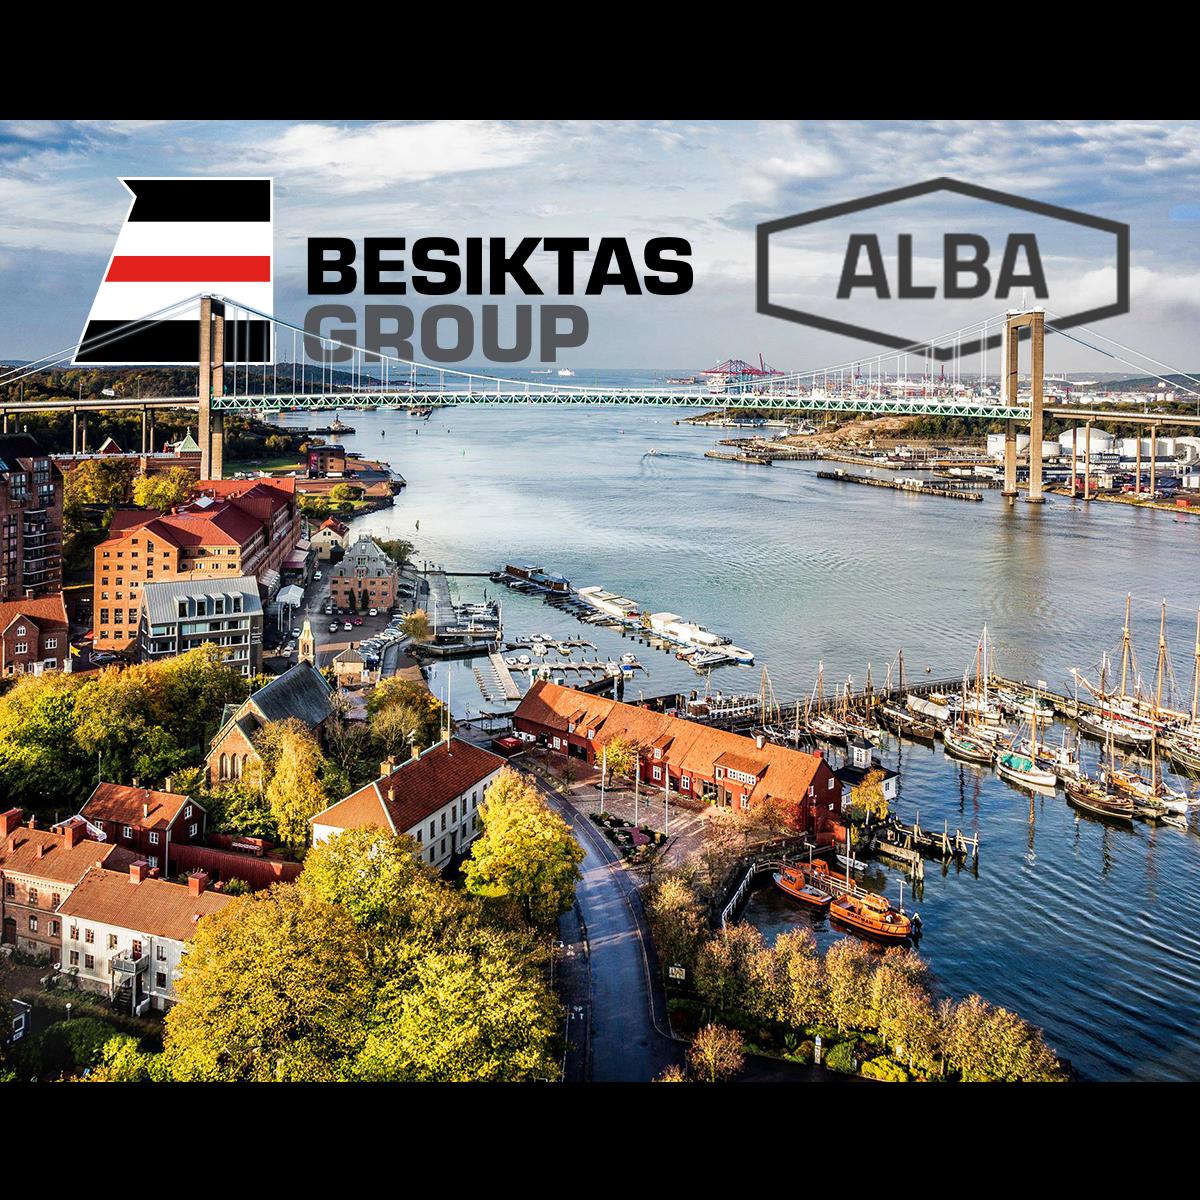 Besiktas Shipping | Partnership Agreement with Alba Tankers